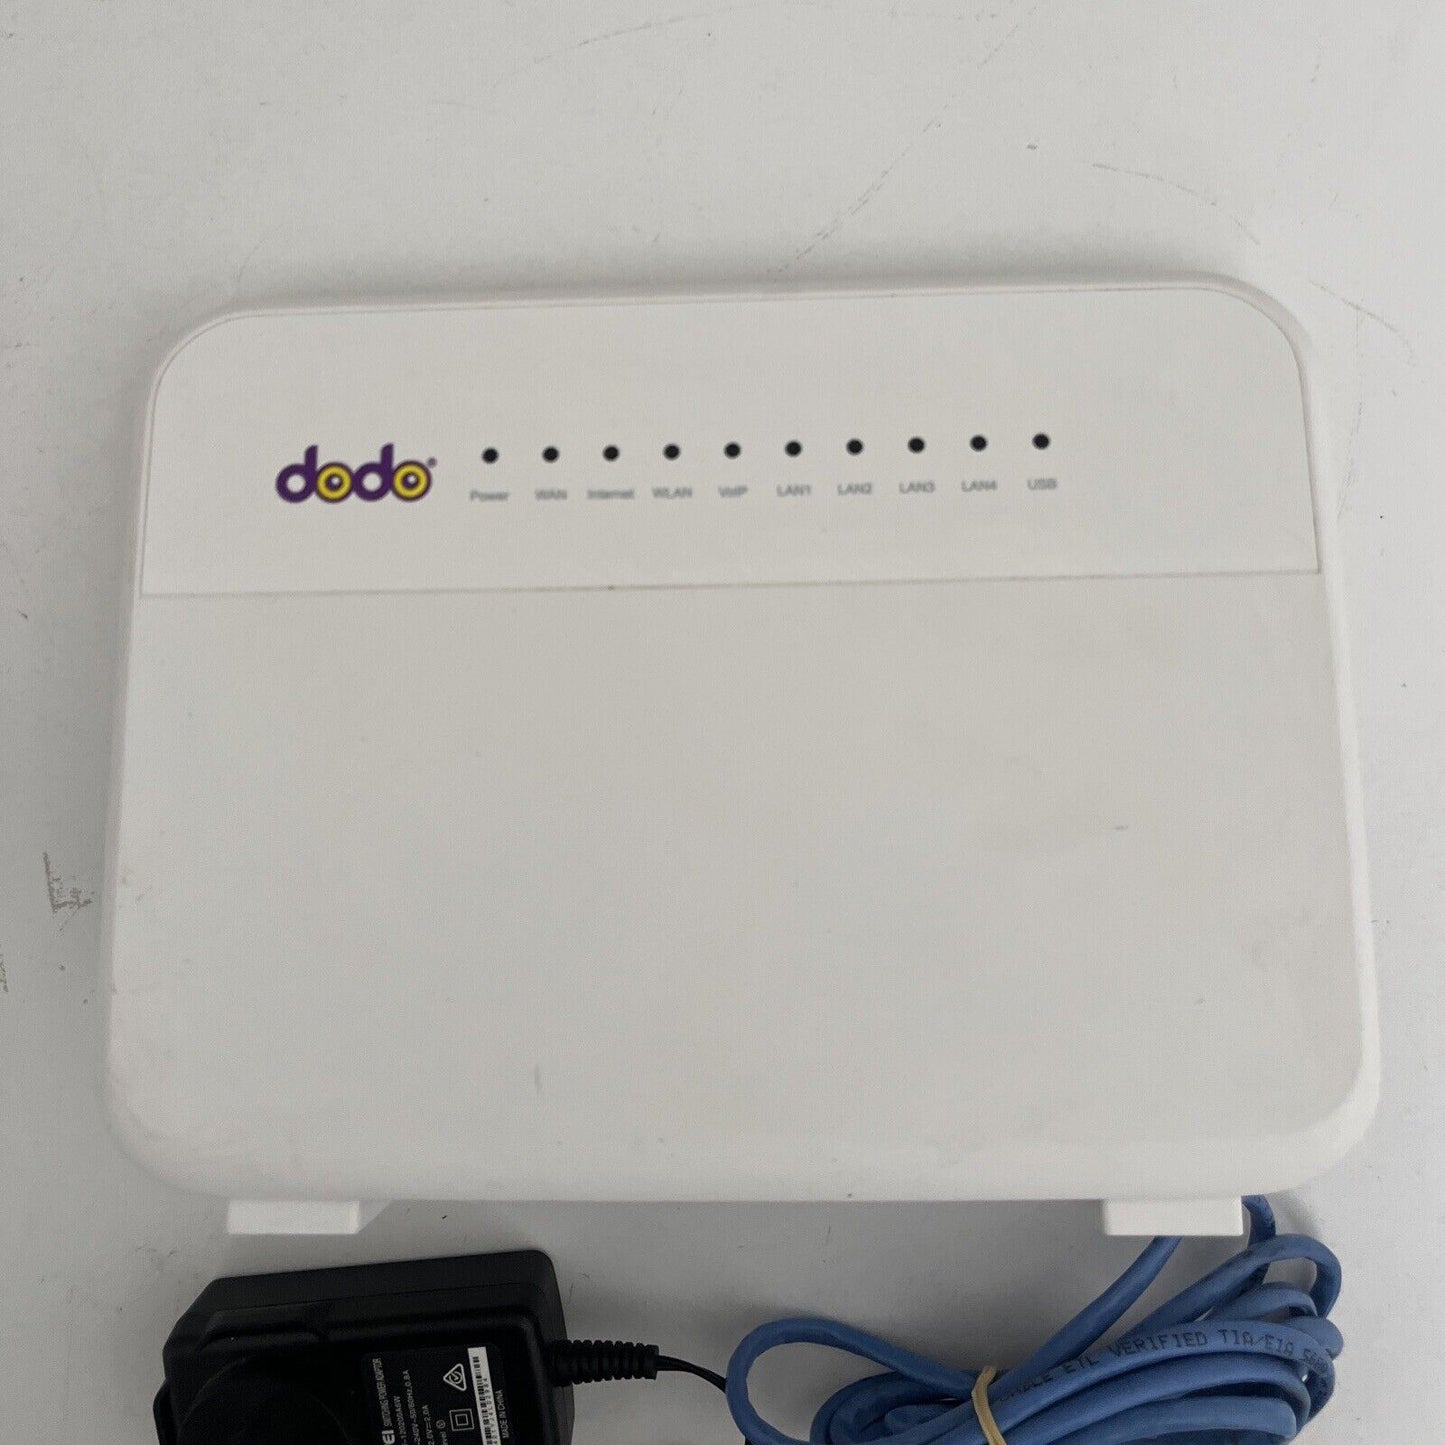 Dodo Home Gateway VoIP Wireless Modem Router Huawei HG659